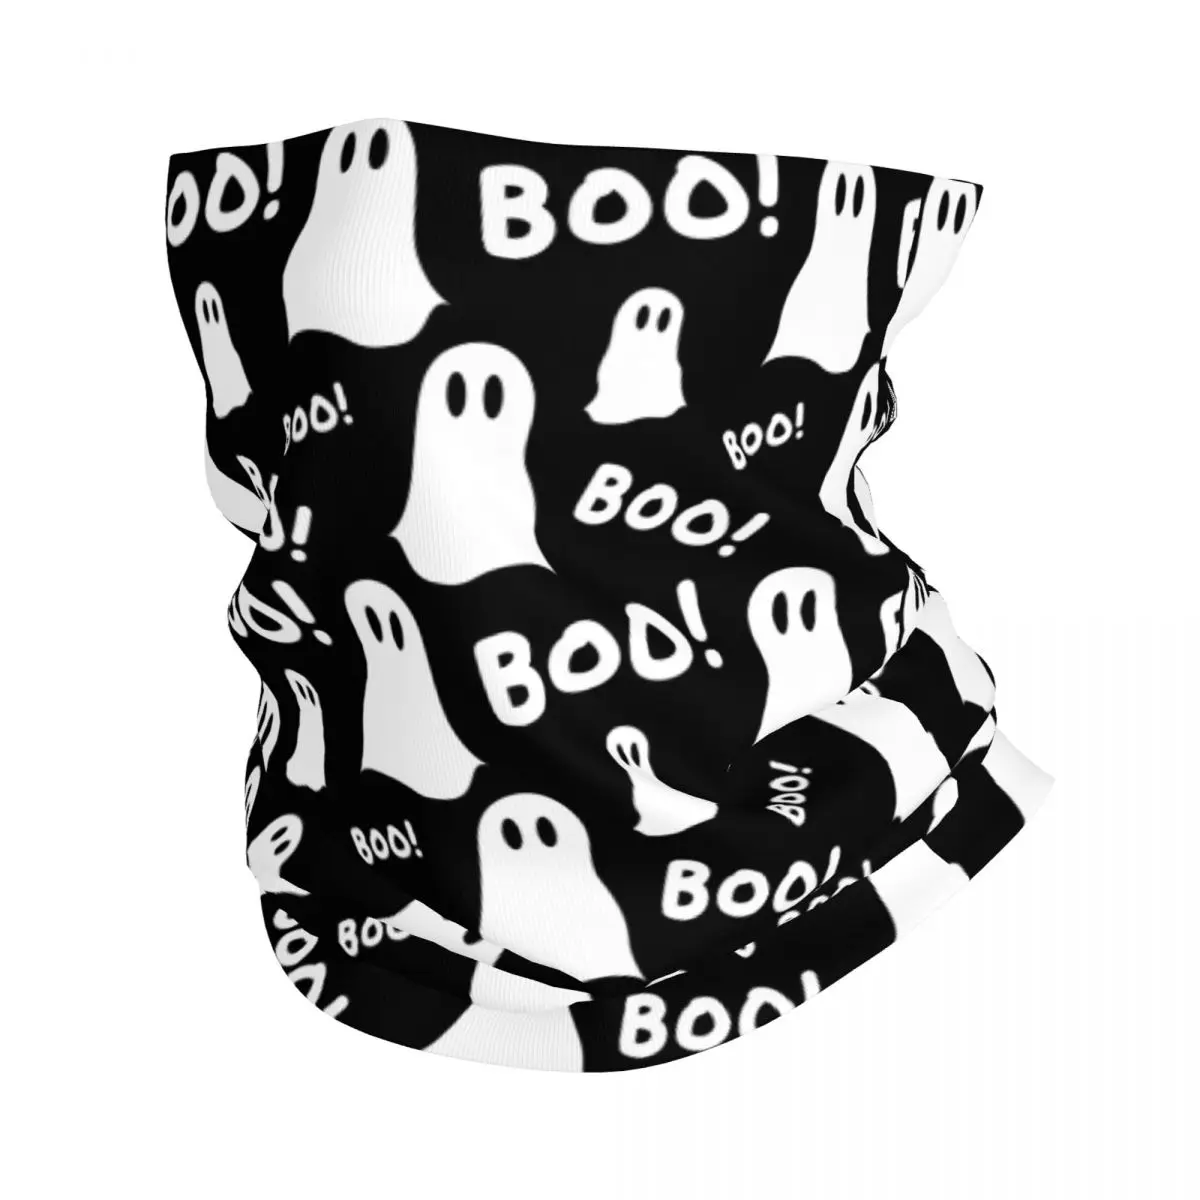 

Halloween Bandana Neck Gaiter Printed Ghosts And The Words "boo!" Balaclavas Wrap Scarf Headwear Fishing for Men Women Windproof